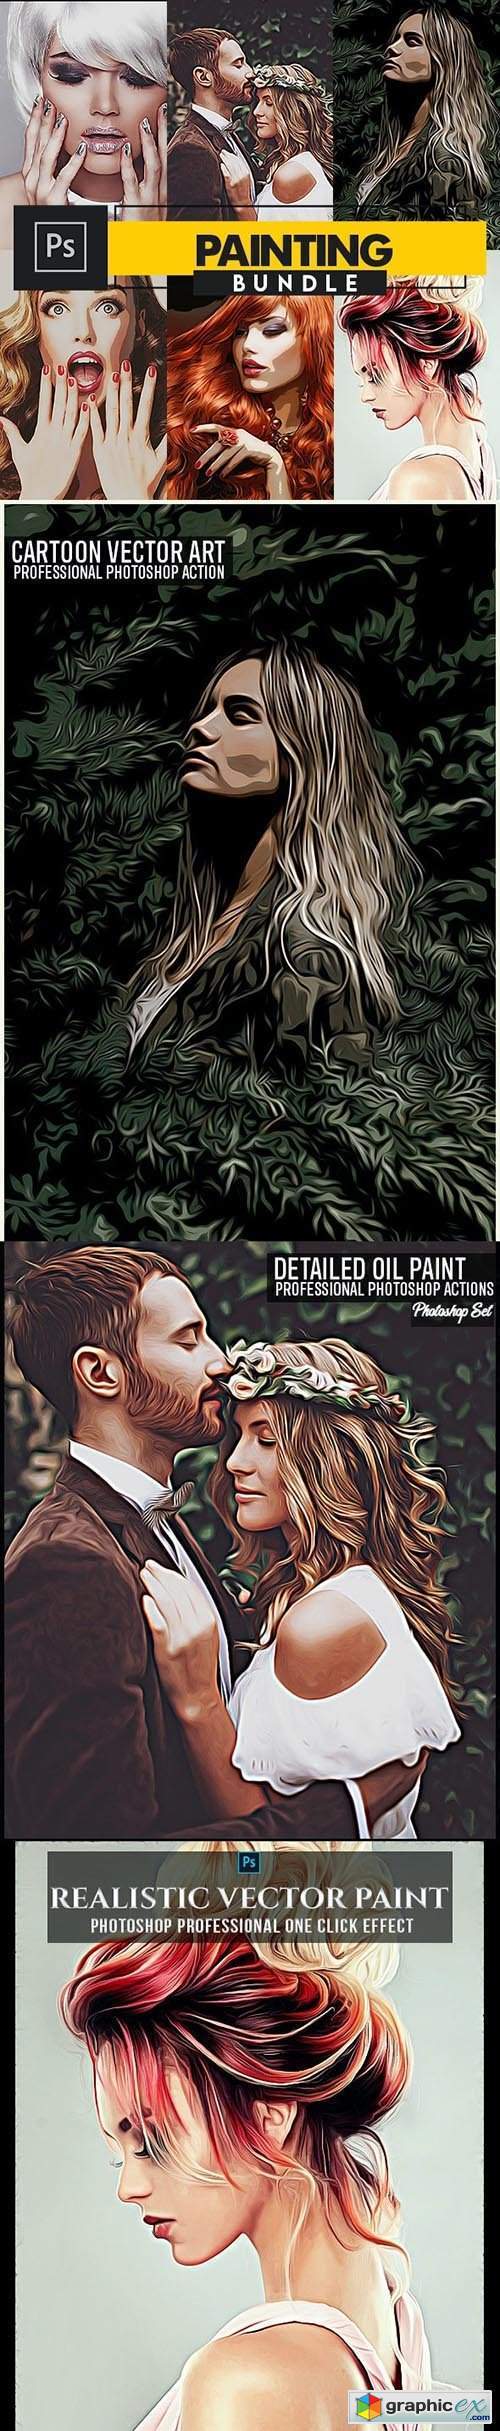 Painting Photoshop Actions Bundle